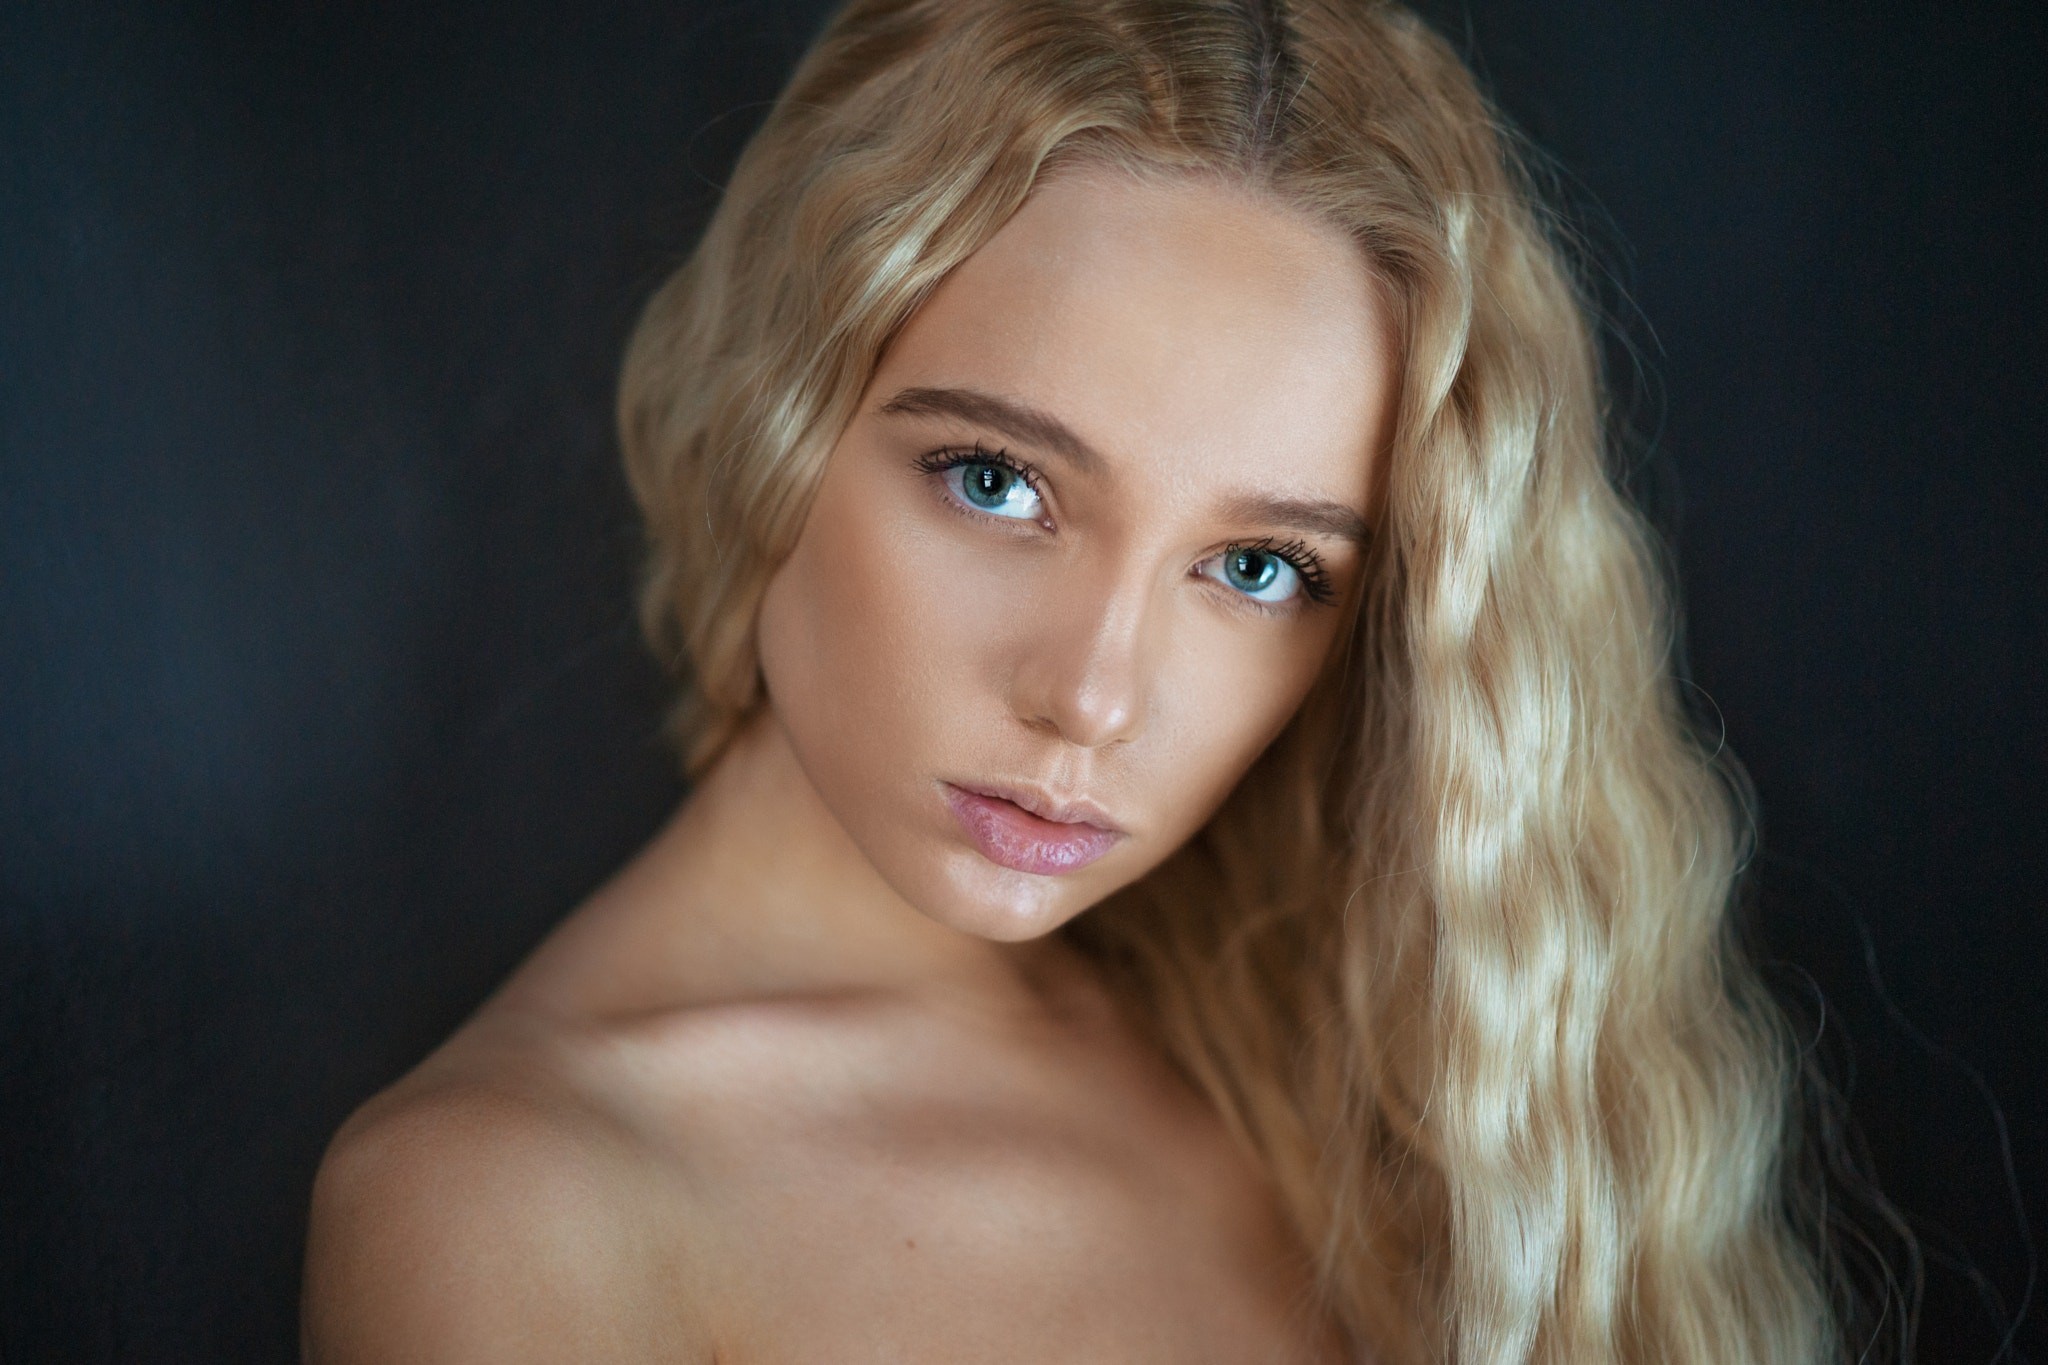 People 2048x1365 women Maxim Maximov blonde blue eyes simple background face portrait Maria Popova implied nude